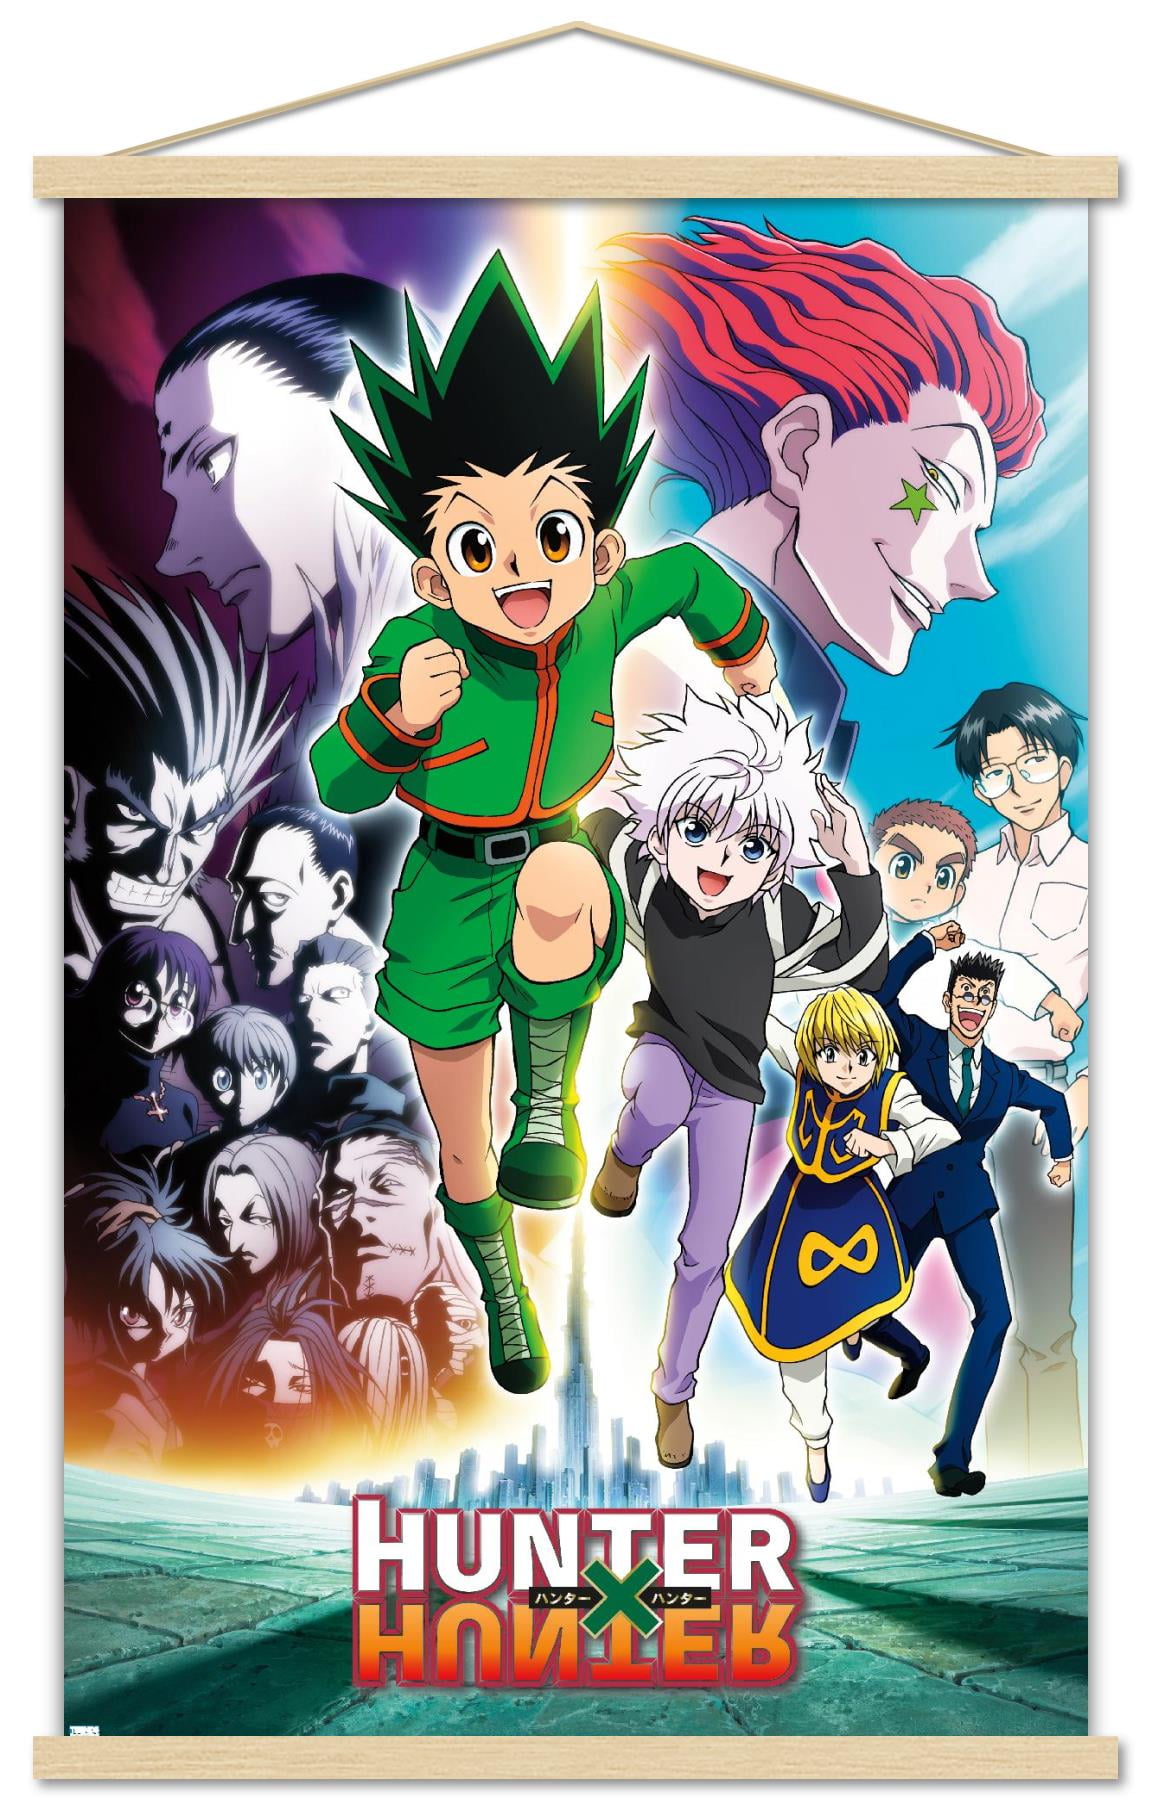 Trends International Dragon Ball Super: Super Hero - Panels Unframed Wall  Poster Print White Mounts Bundle 22.375 x 34